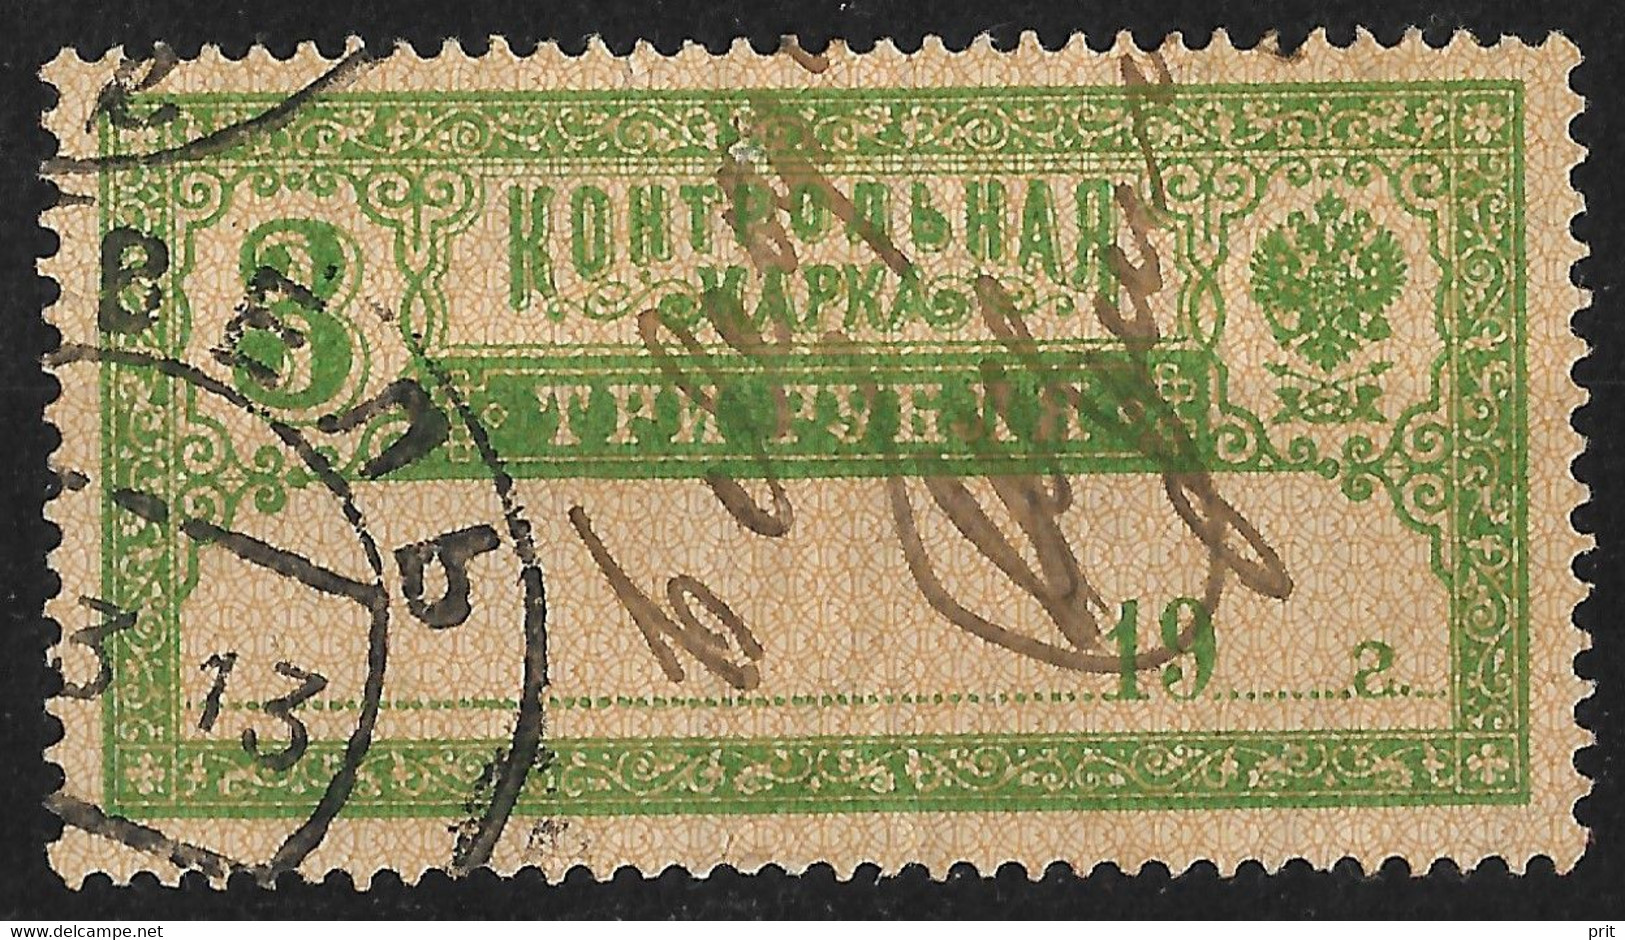 Russia 1900 3Rub Postal Savings Receipt/Revenue. Used In Reval/Ревель Tallinn In 1913. J.Barefoot Cat 19/Michel 133. - Revenue Stamps